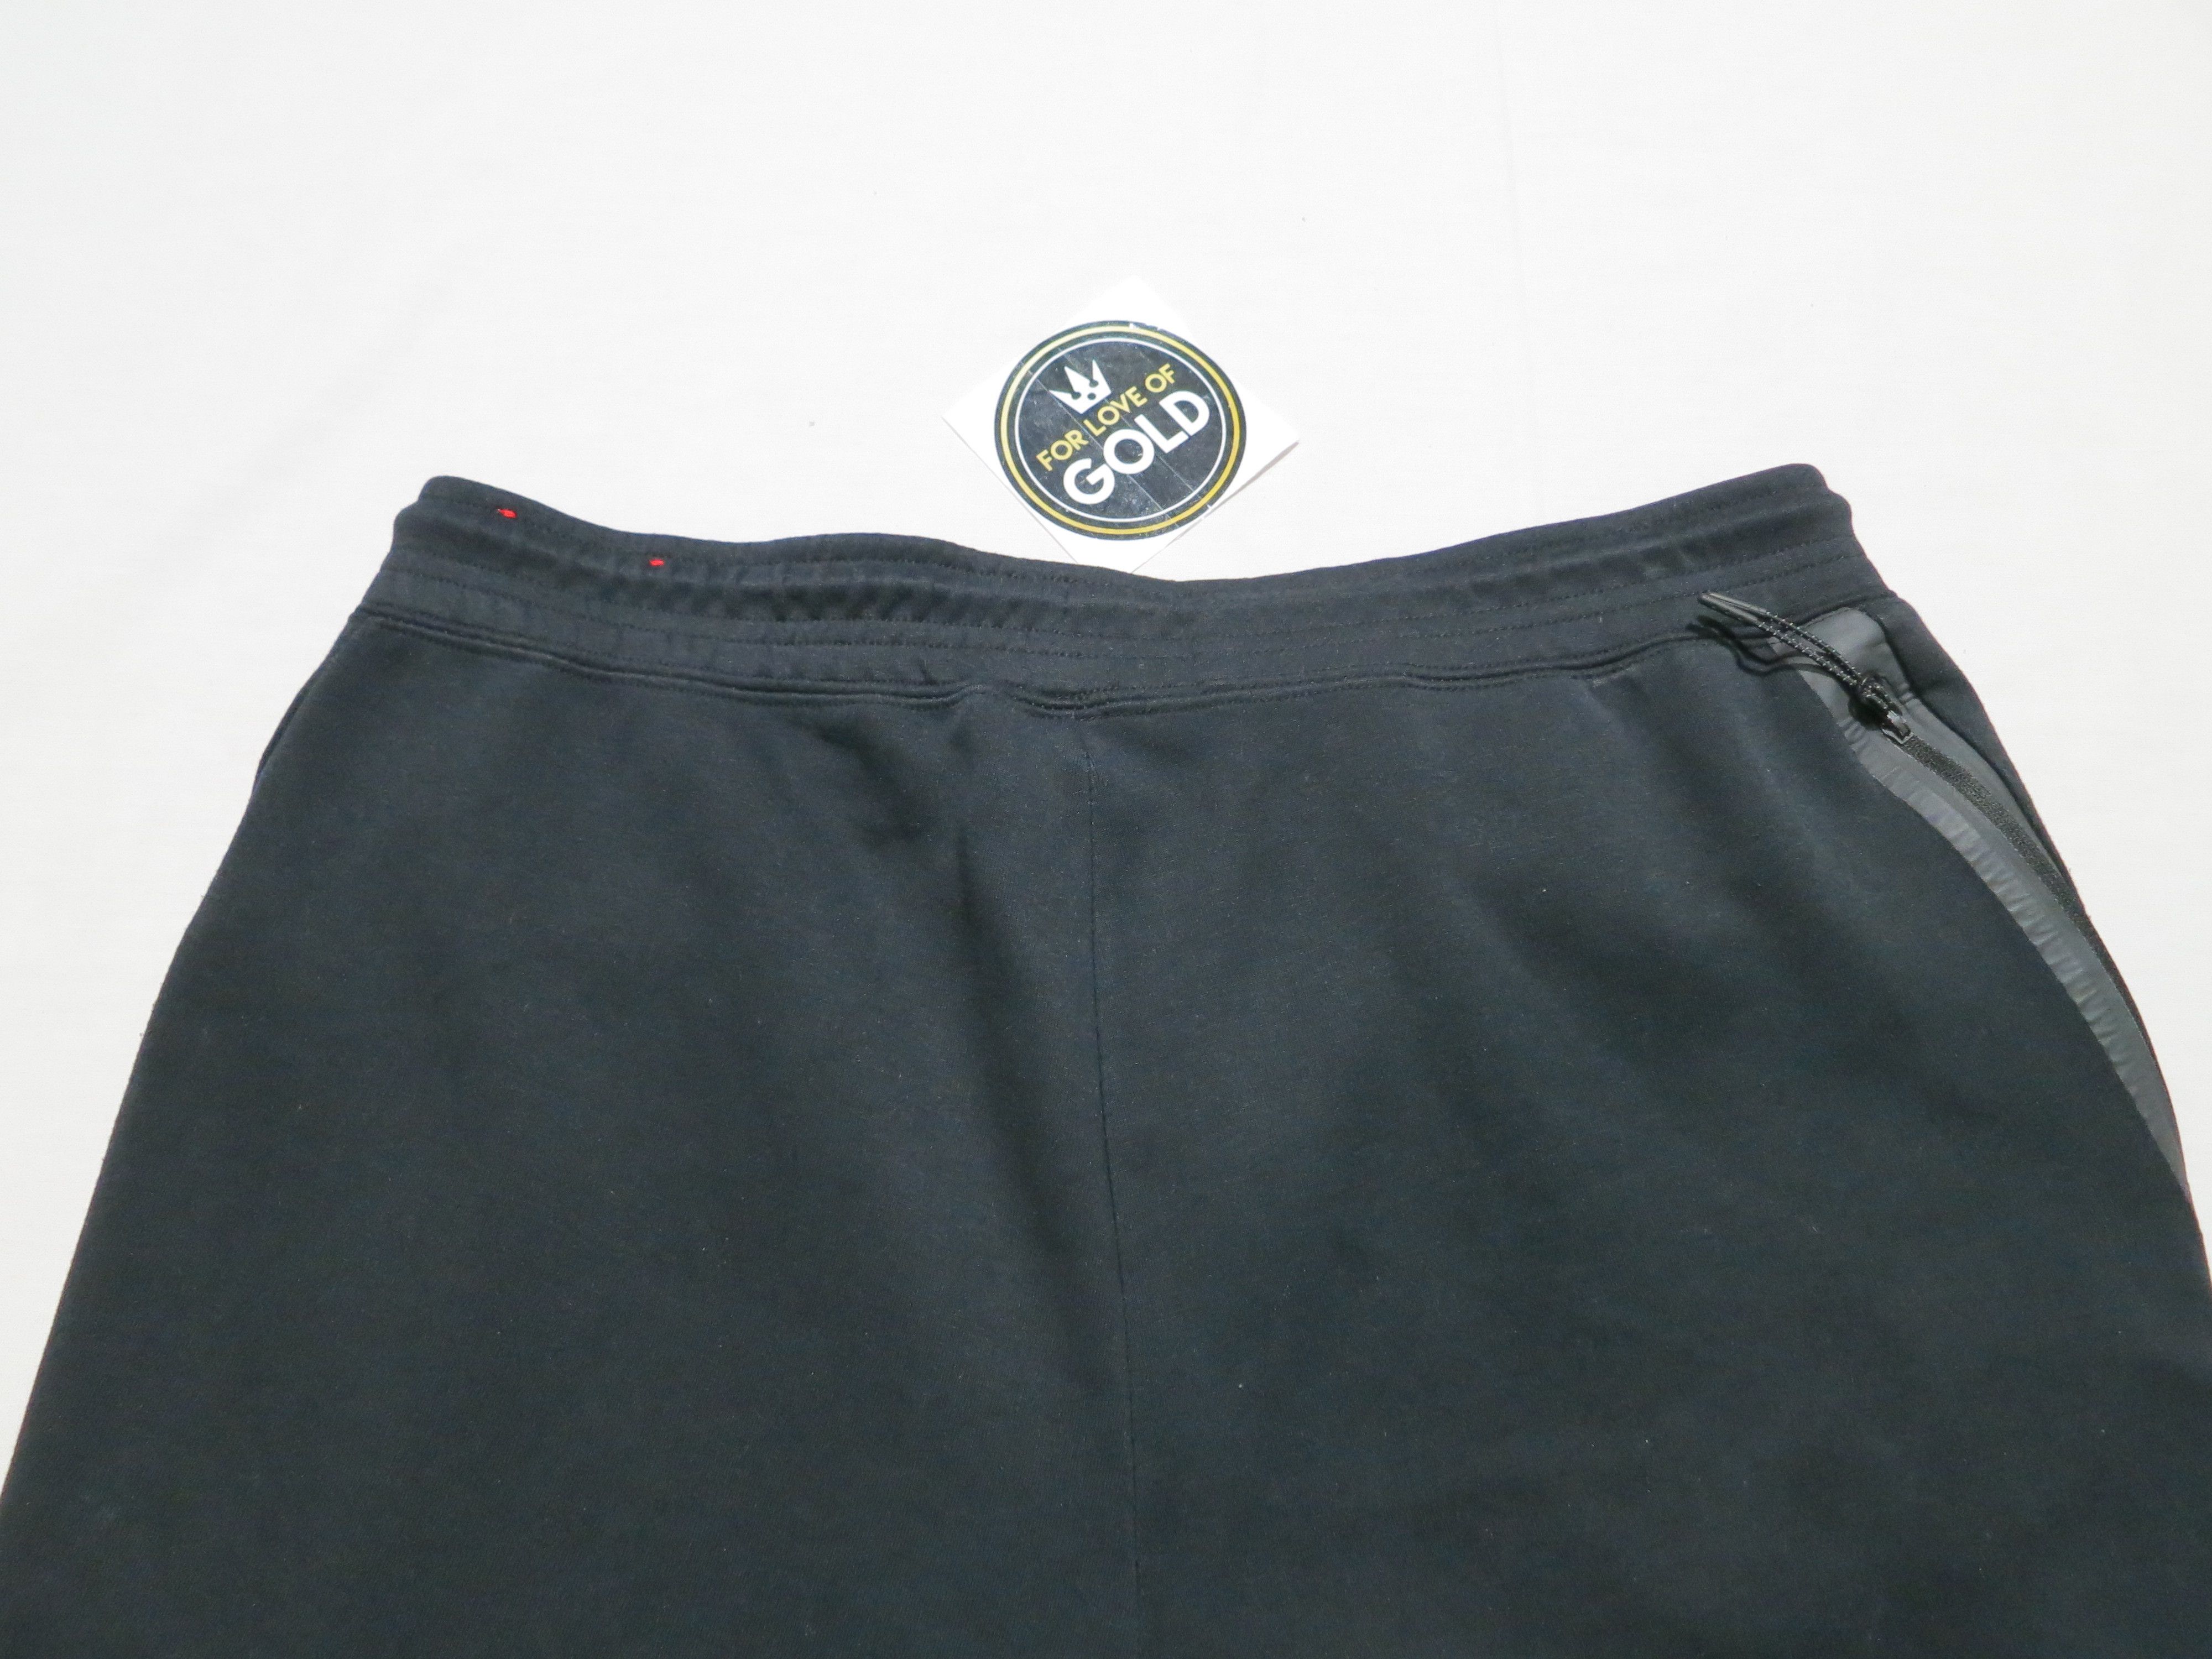 Nike Nike tech fleece black joggers sweatpants Size US 32 / EU 48 - 5 Thumbnail